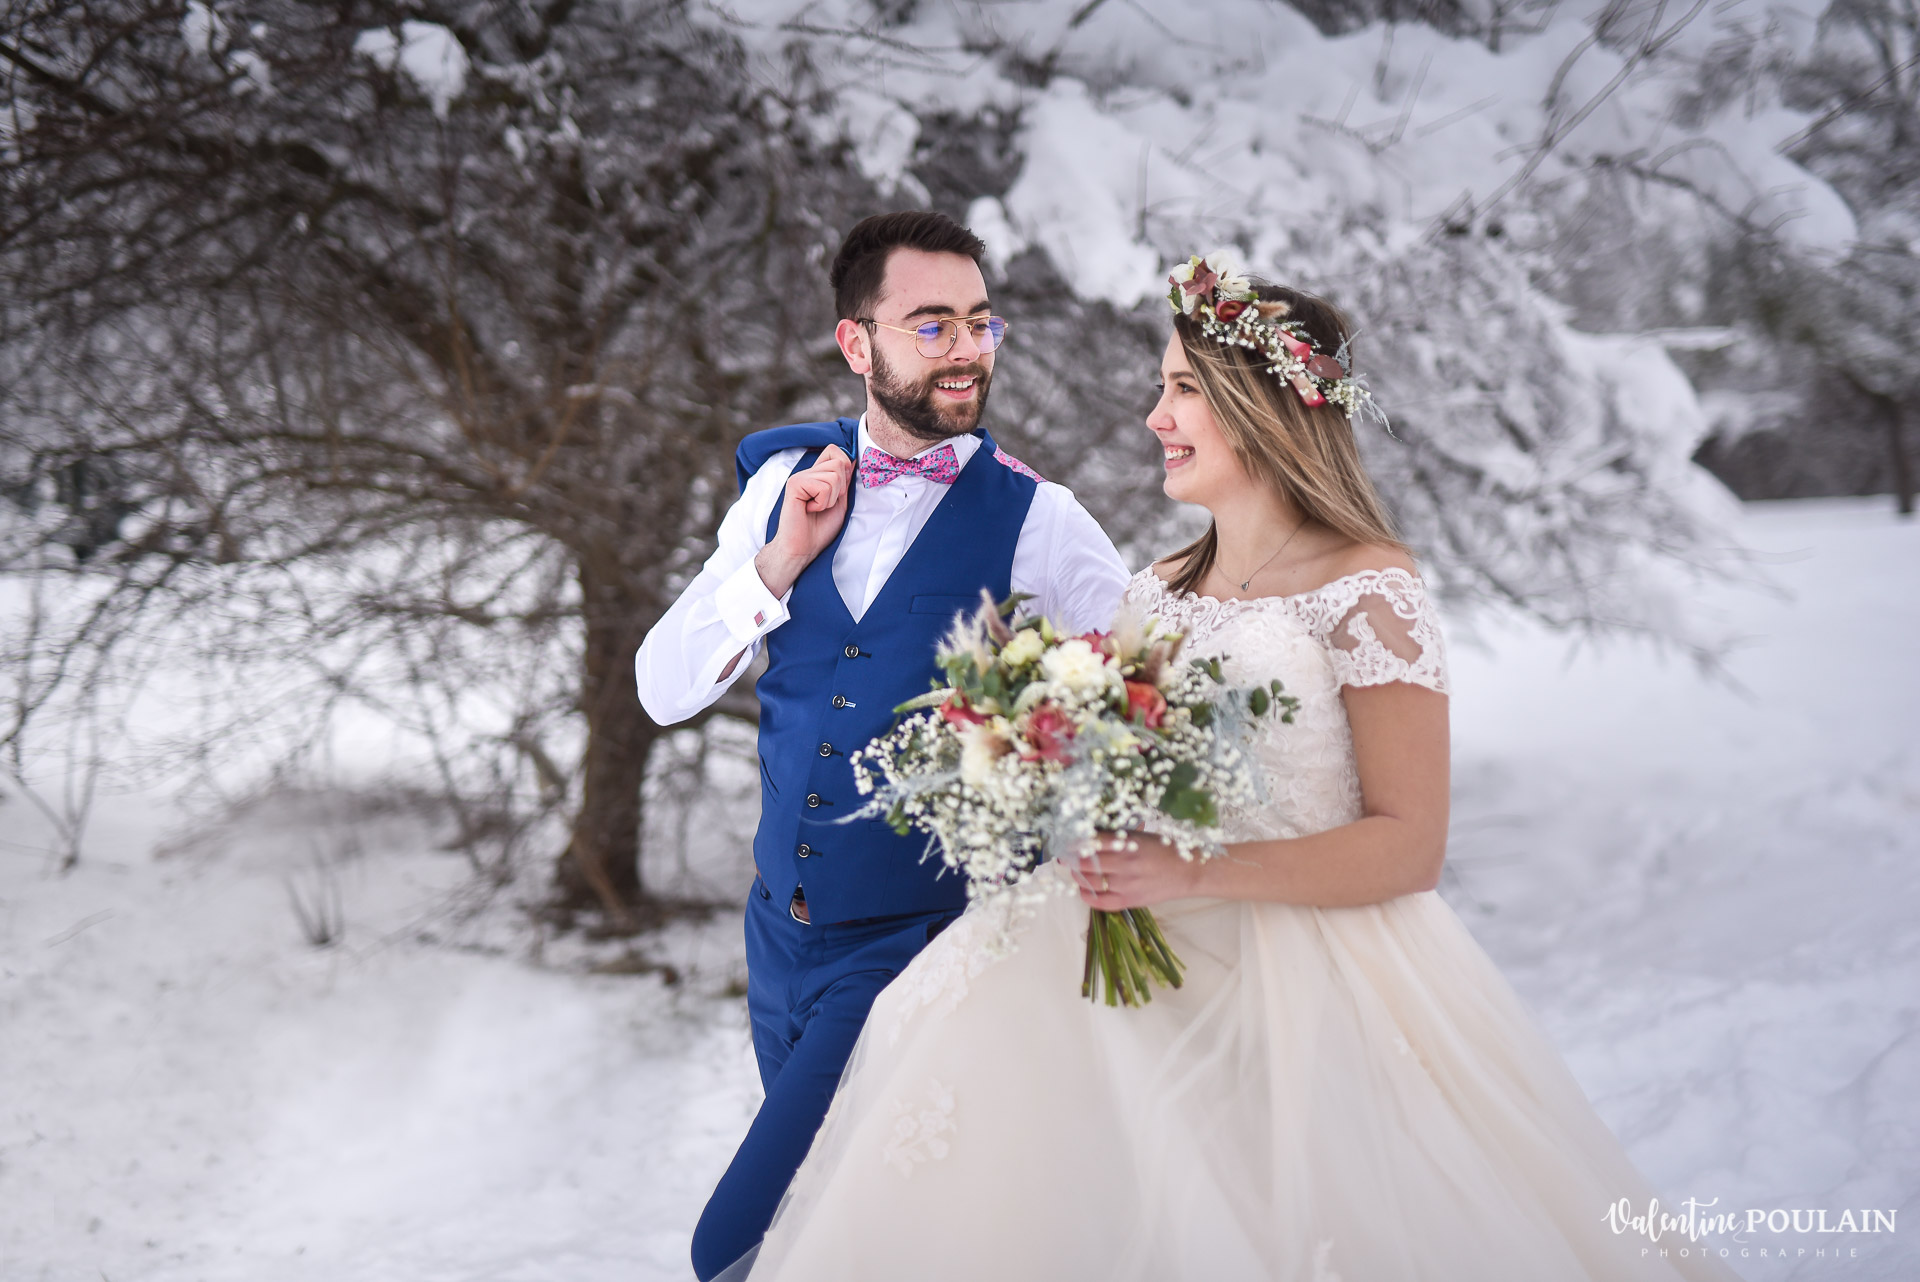 Photo mariage neige hiver - Valentine Poulain regard